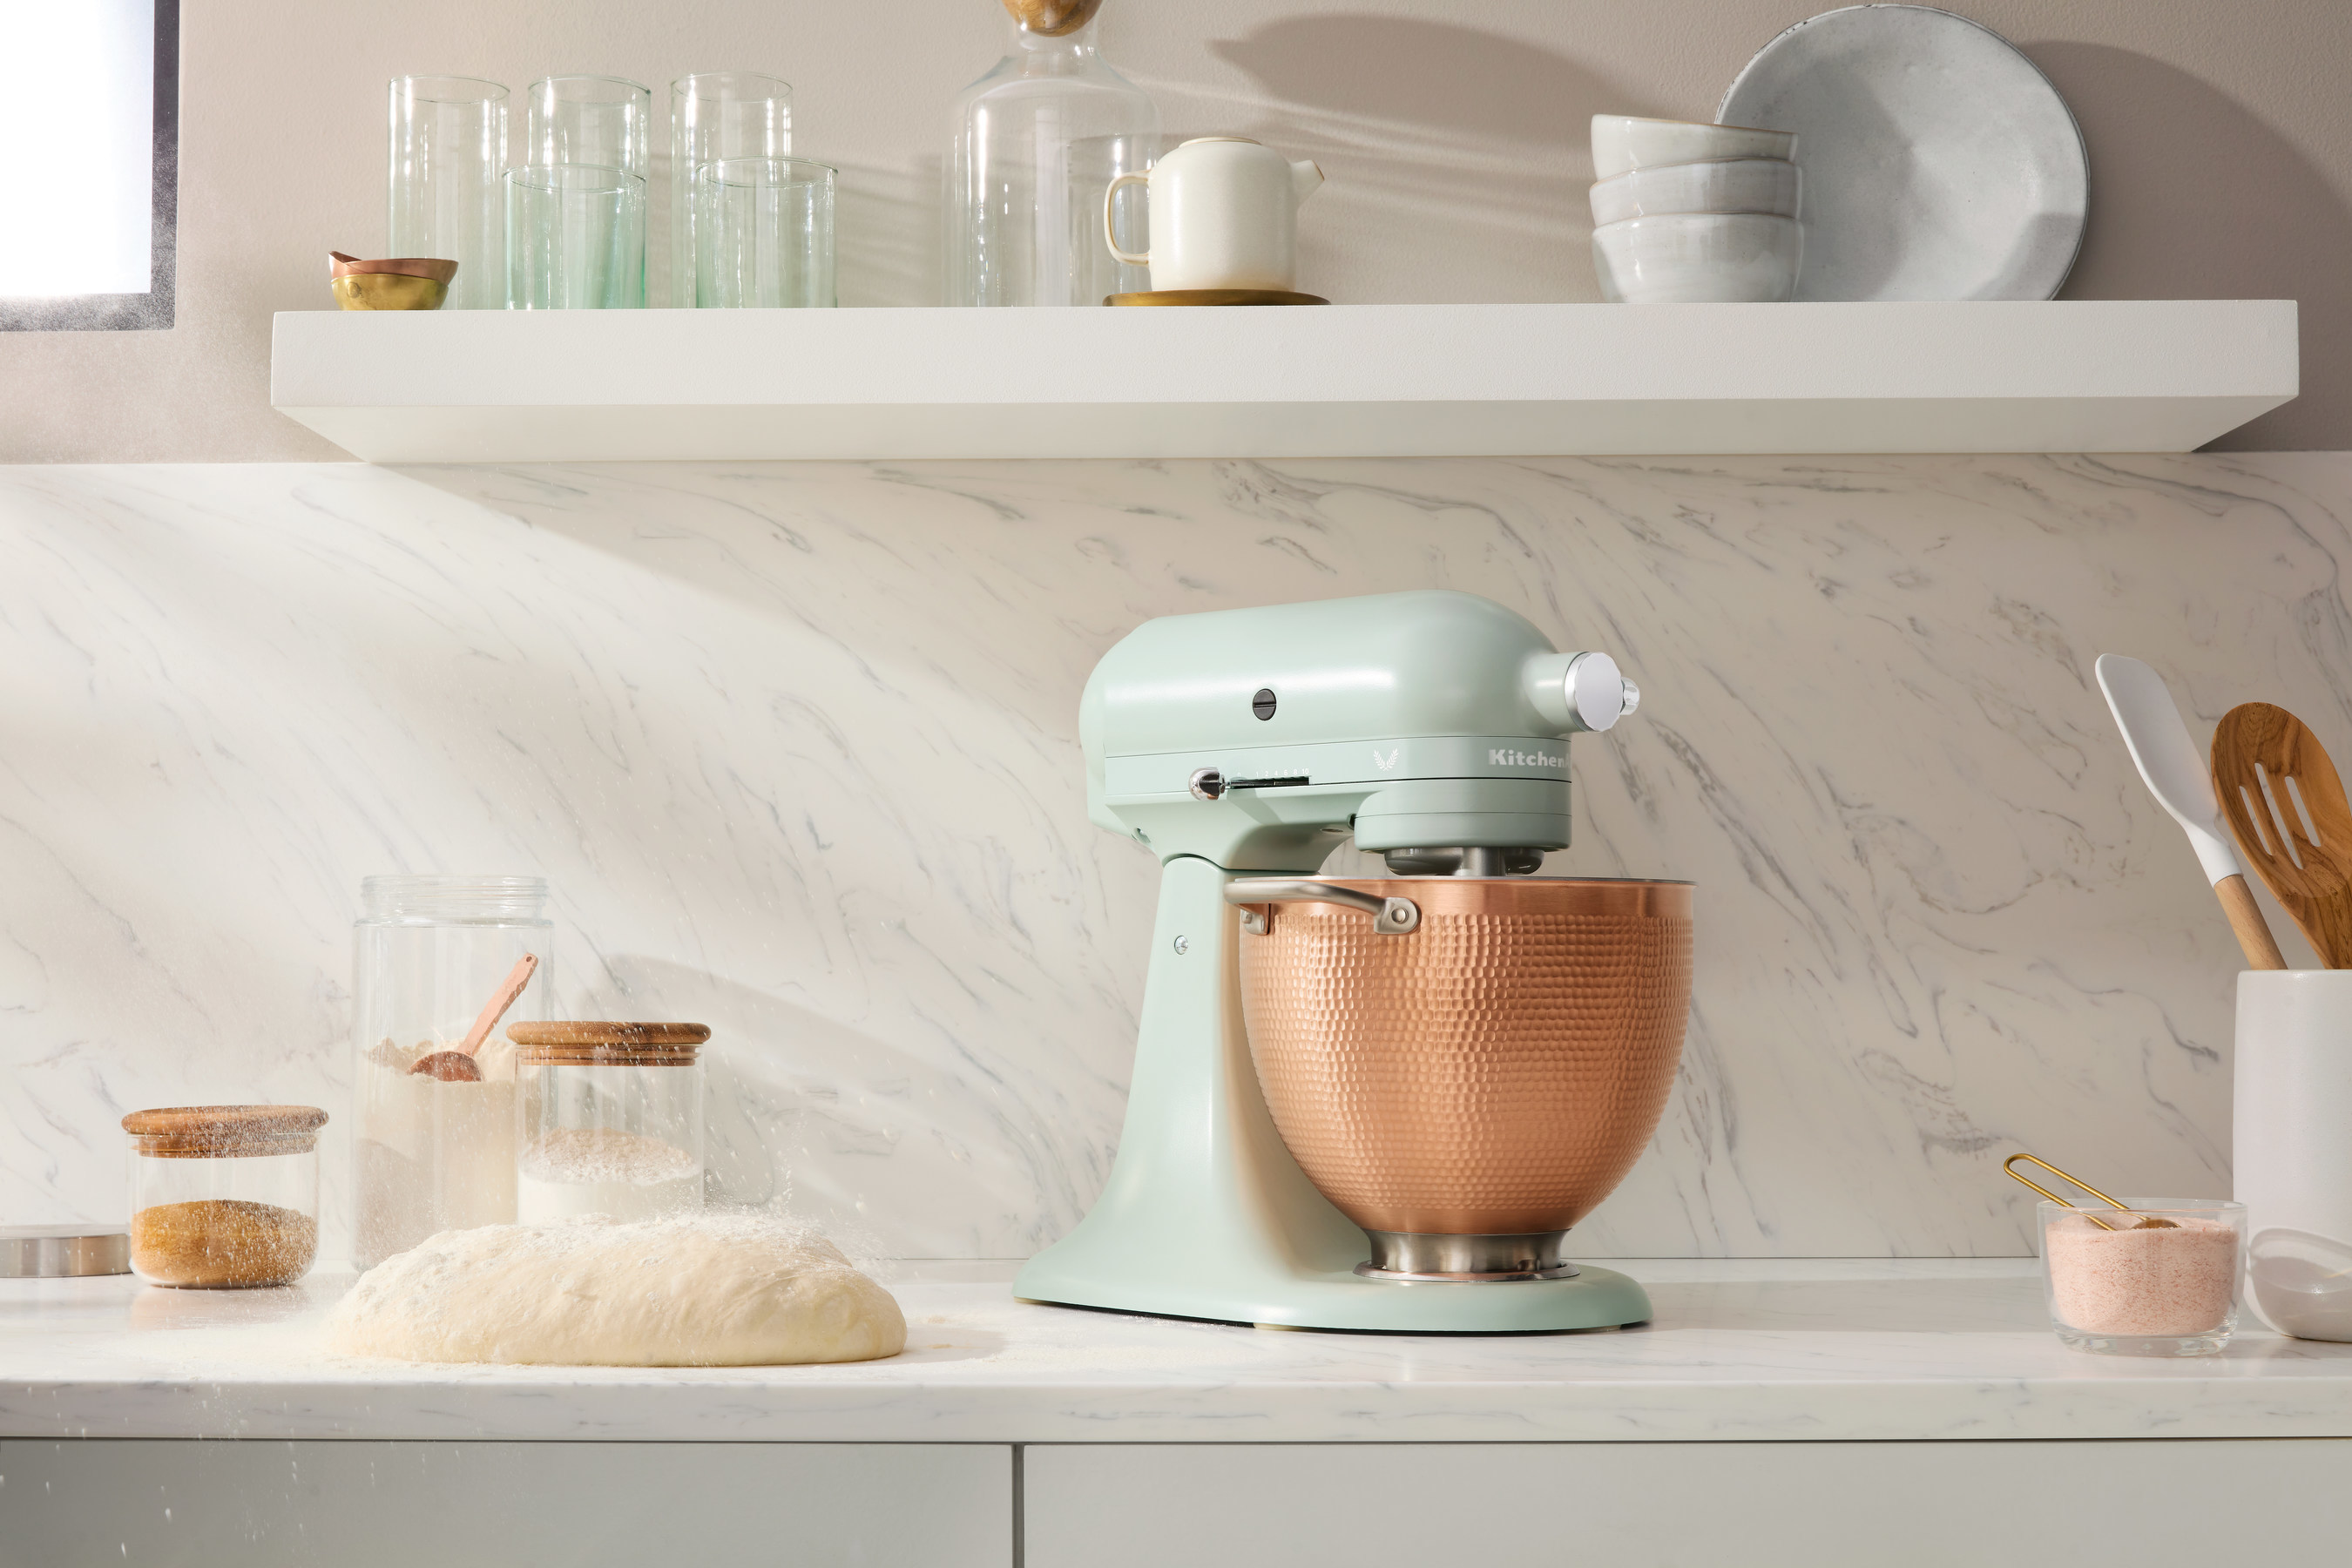 KitchenAid launched a new Mini Food Processor - Home Appliances World